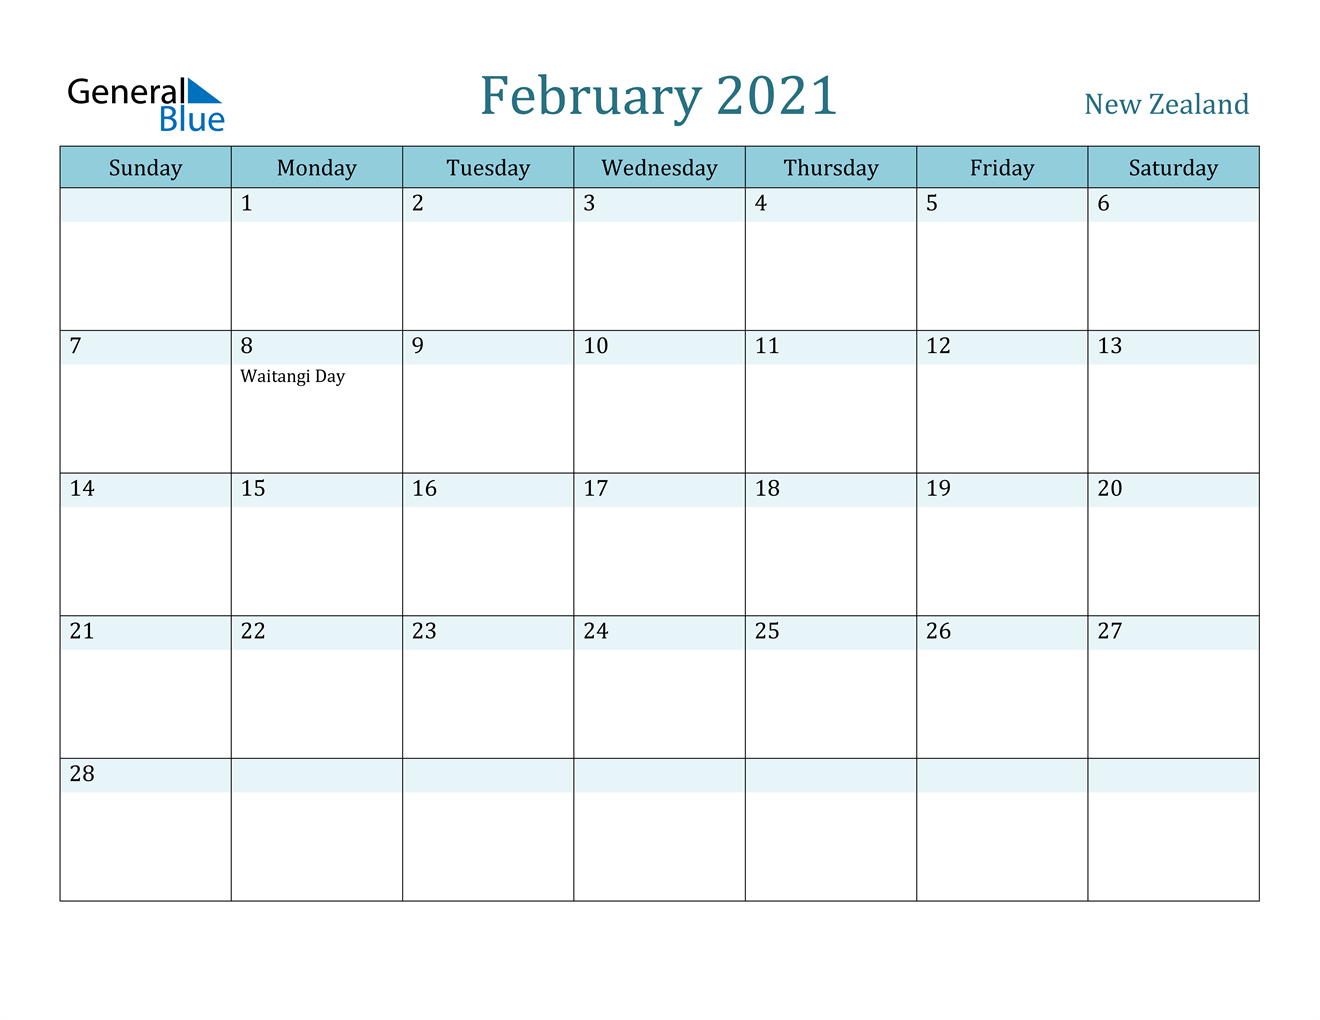 February 2021 Calendar - New Zealand